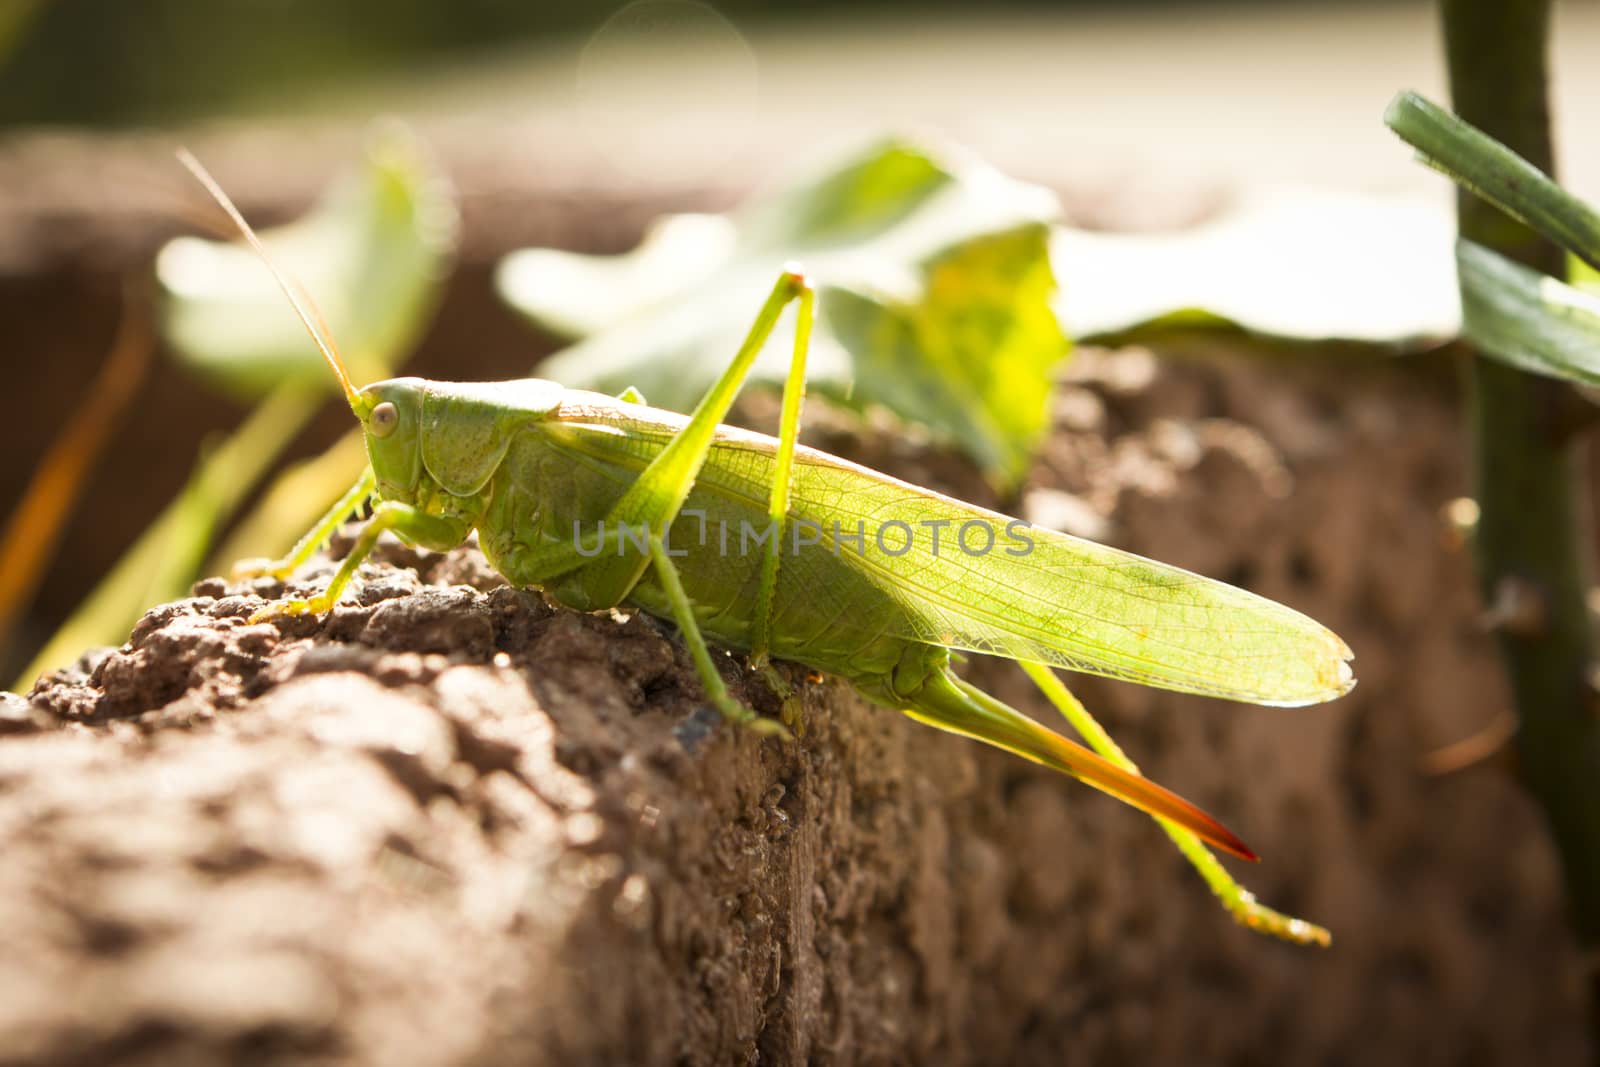 grasshopper by Tomjac1980